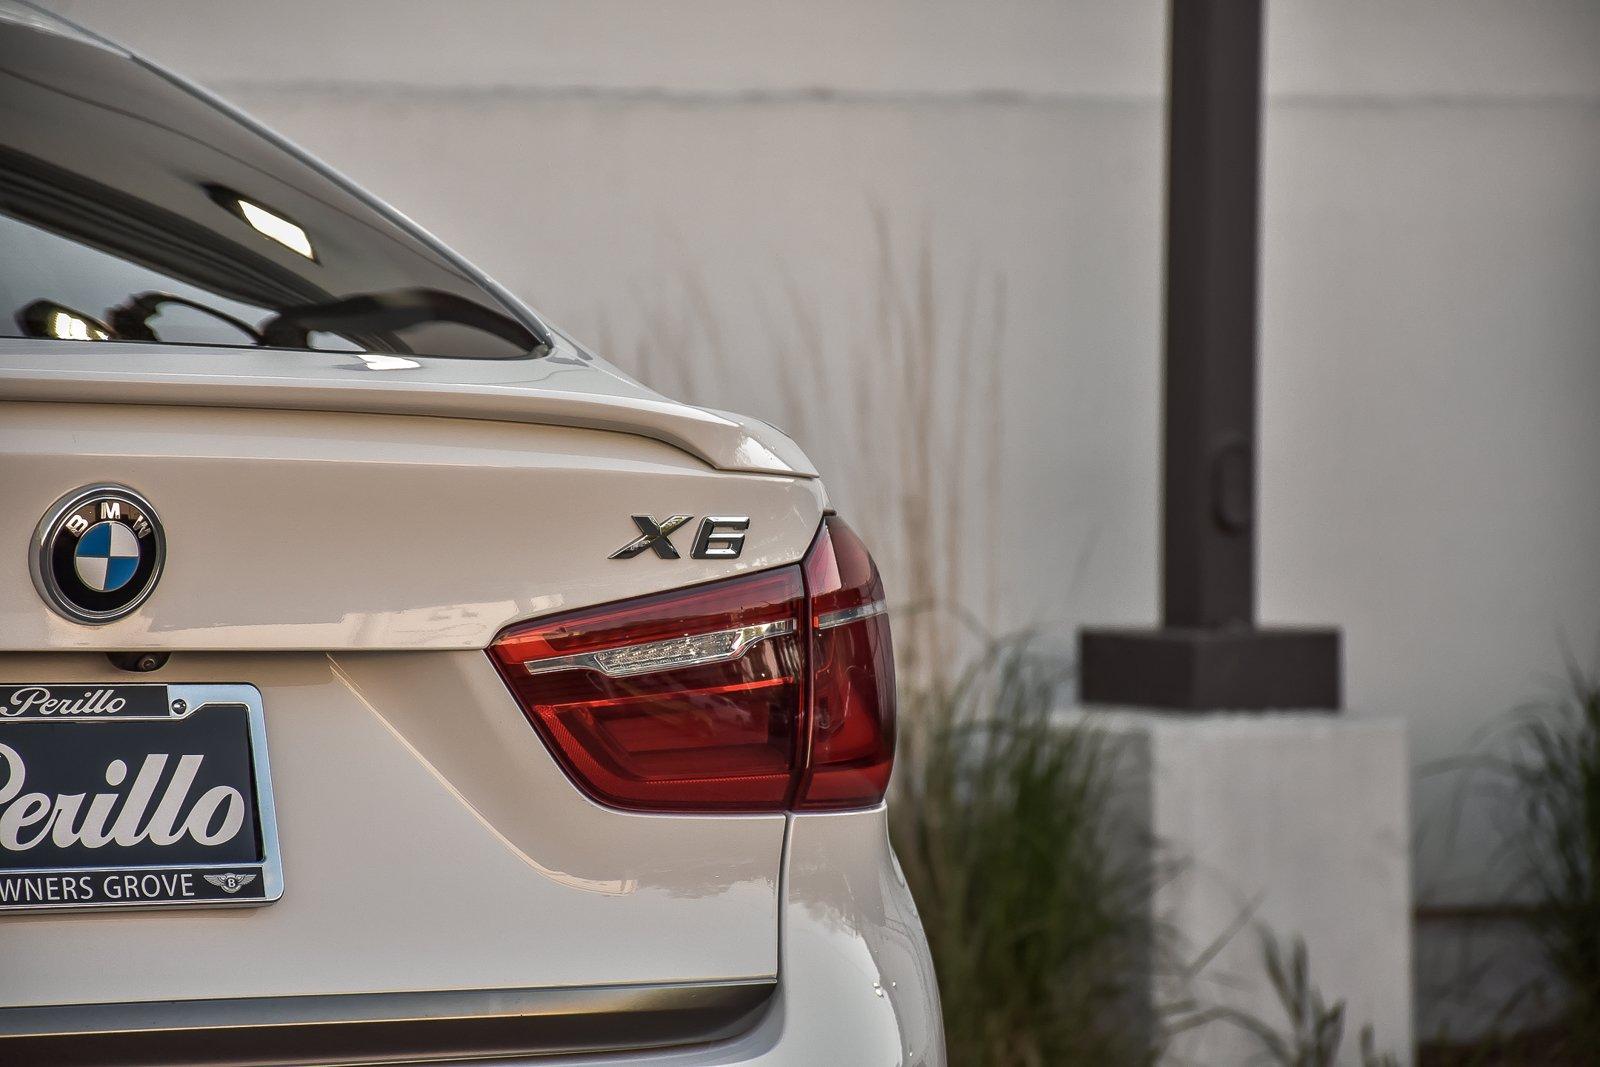 Used 2016 BMW X6 xDrive35i X-Line Premium | Downers Grove, IL